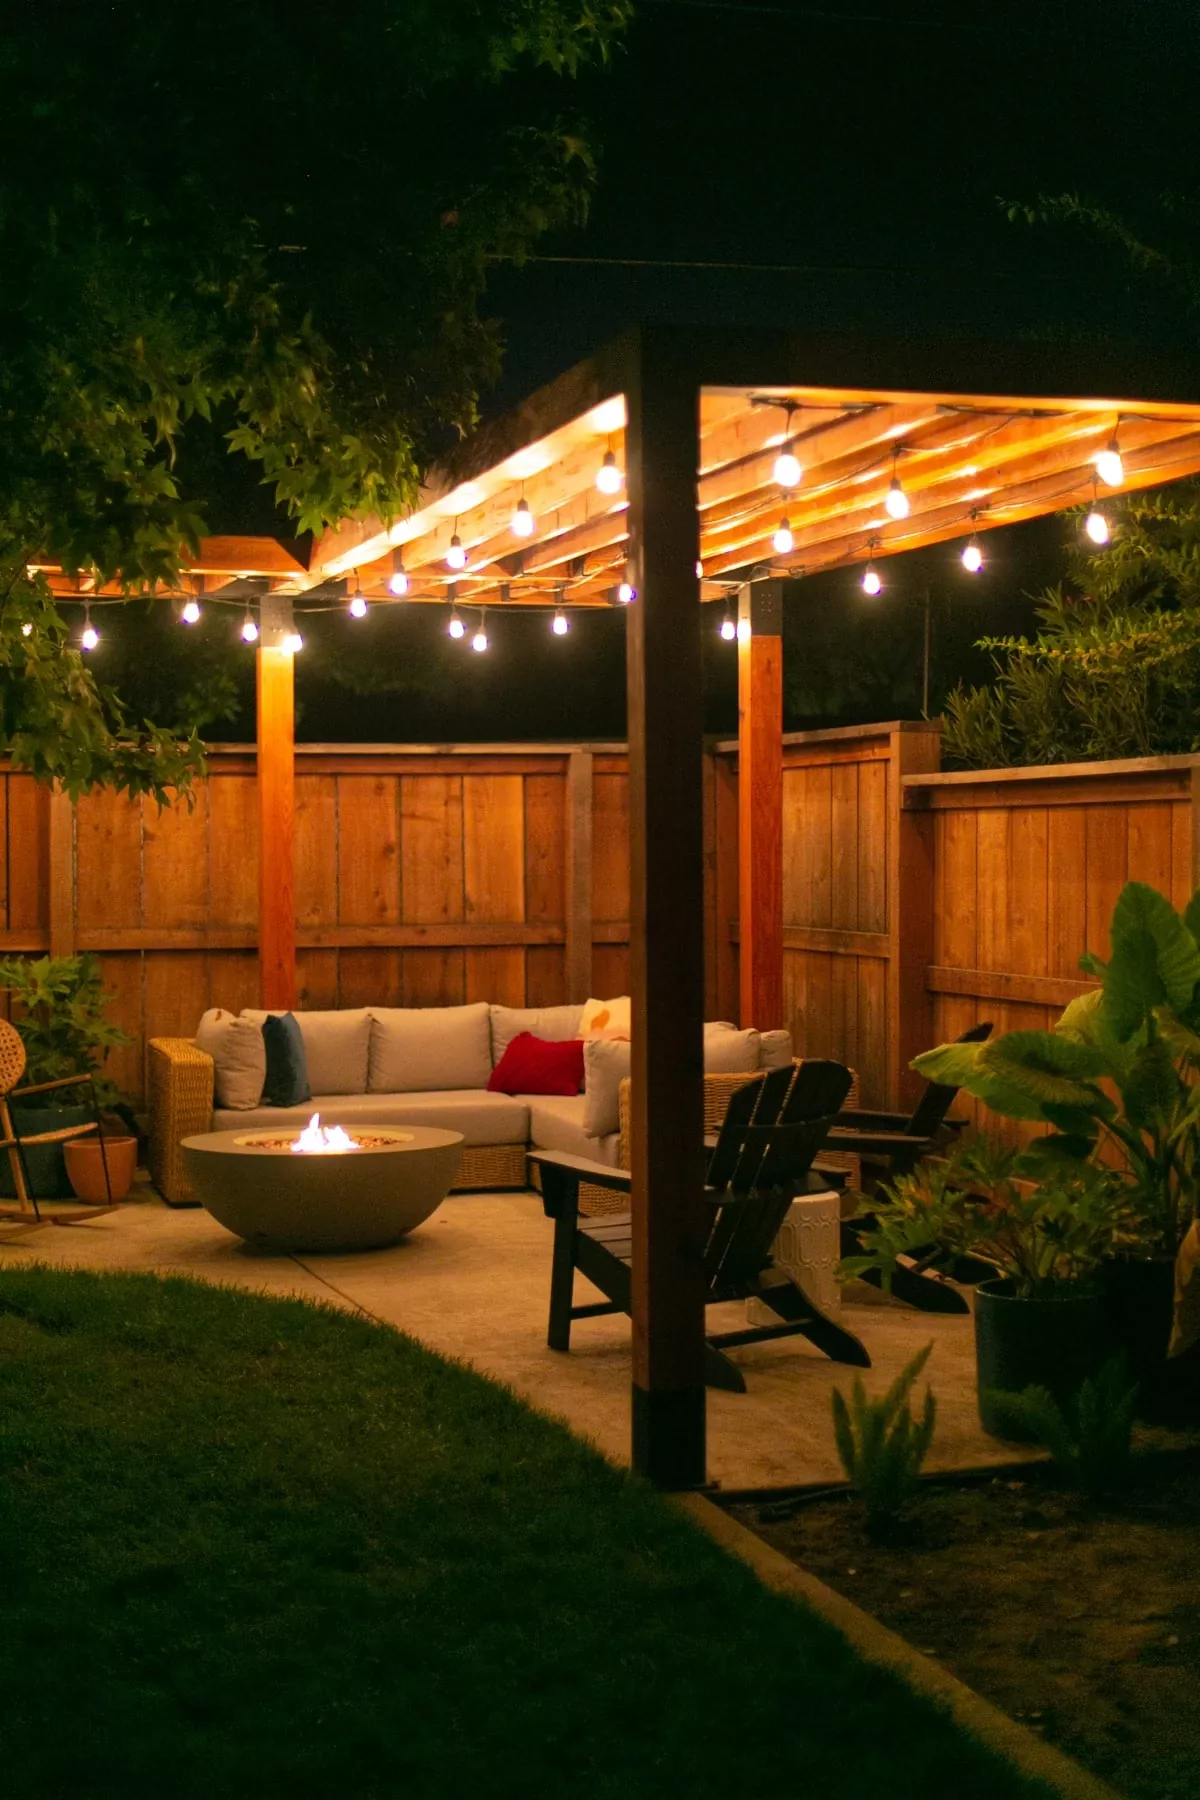 Creative and Inspiring Backyard Design Ideas for Your Outdoor Space